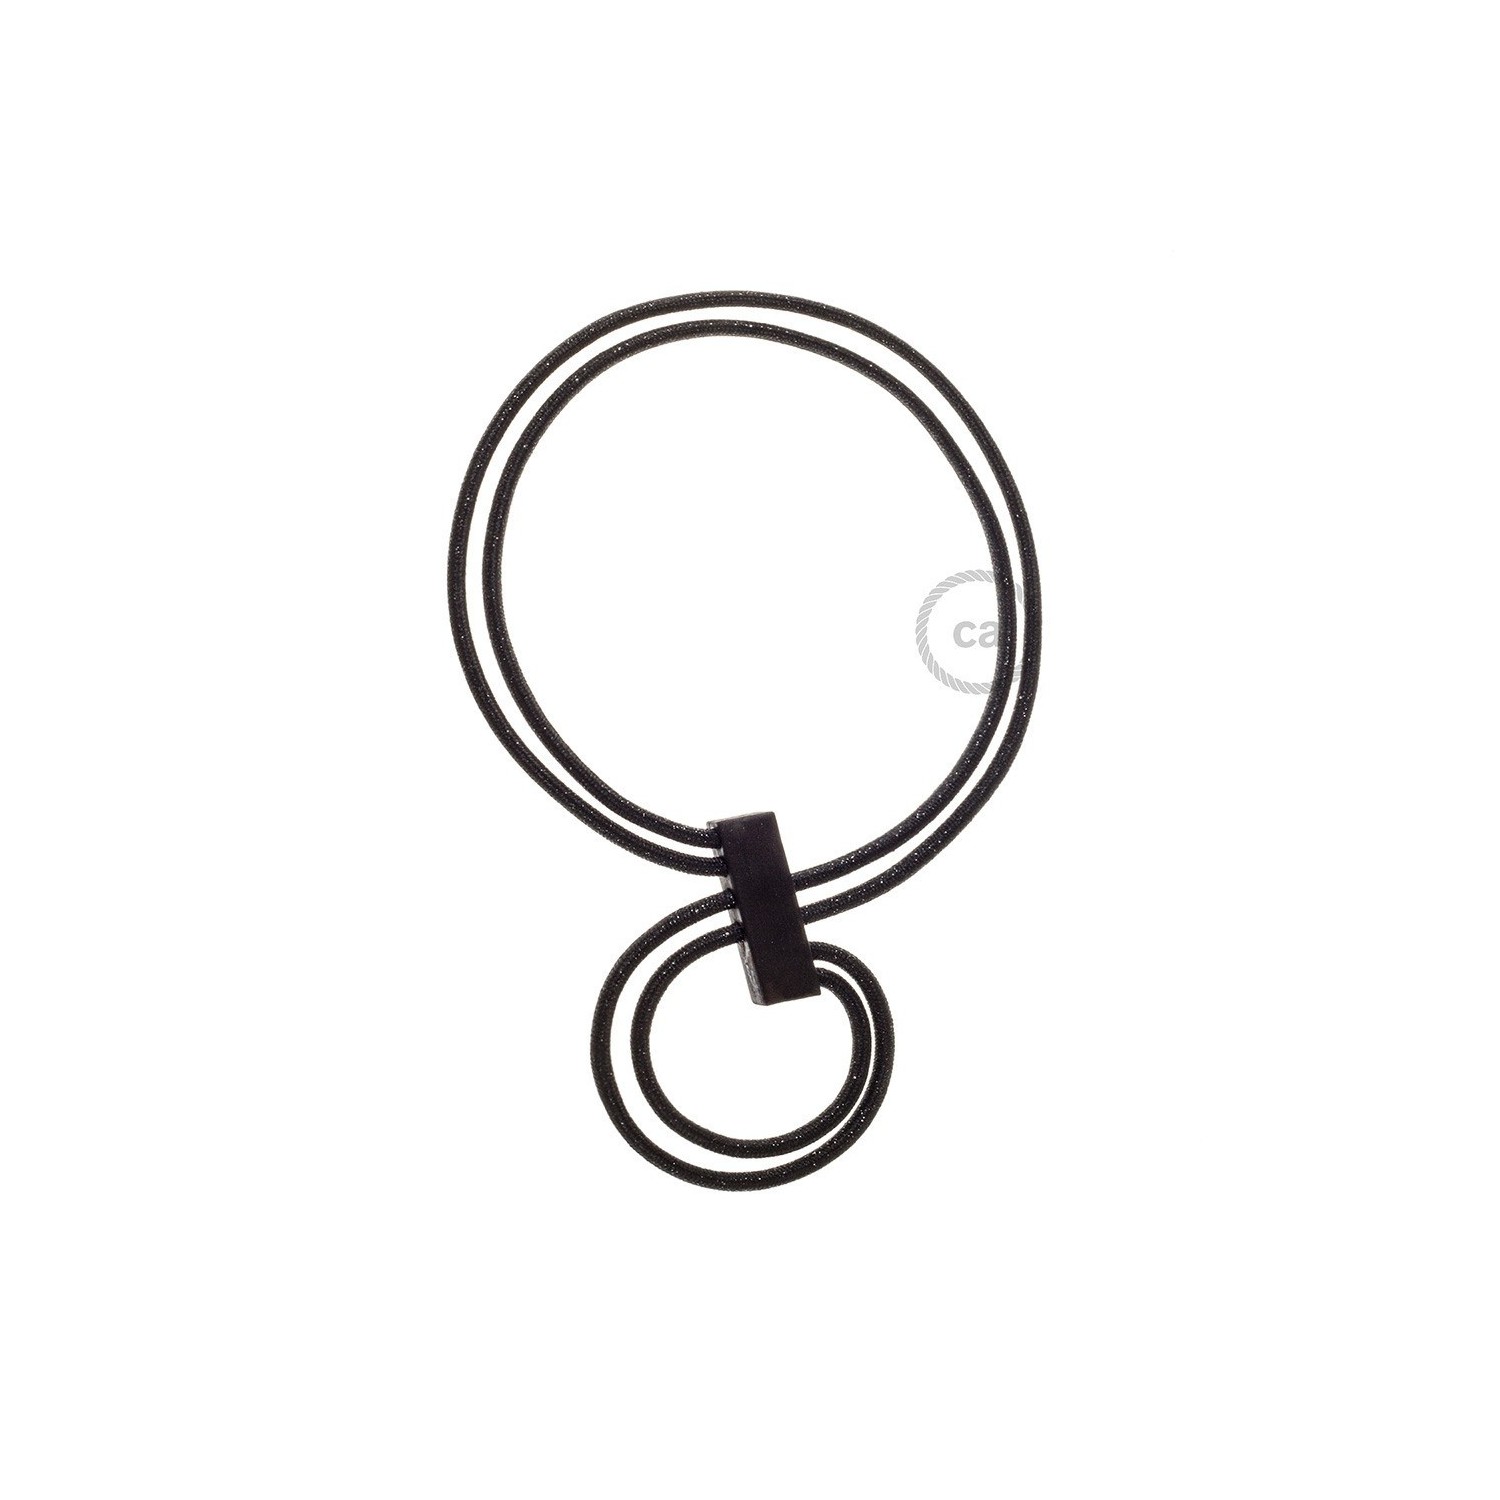 Infinity necklace adjustable color glittering black RL04.